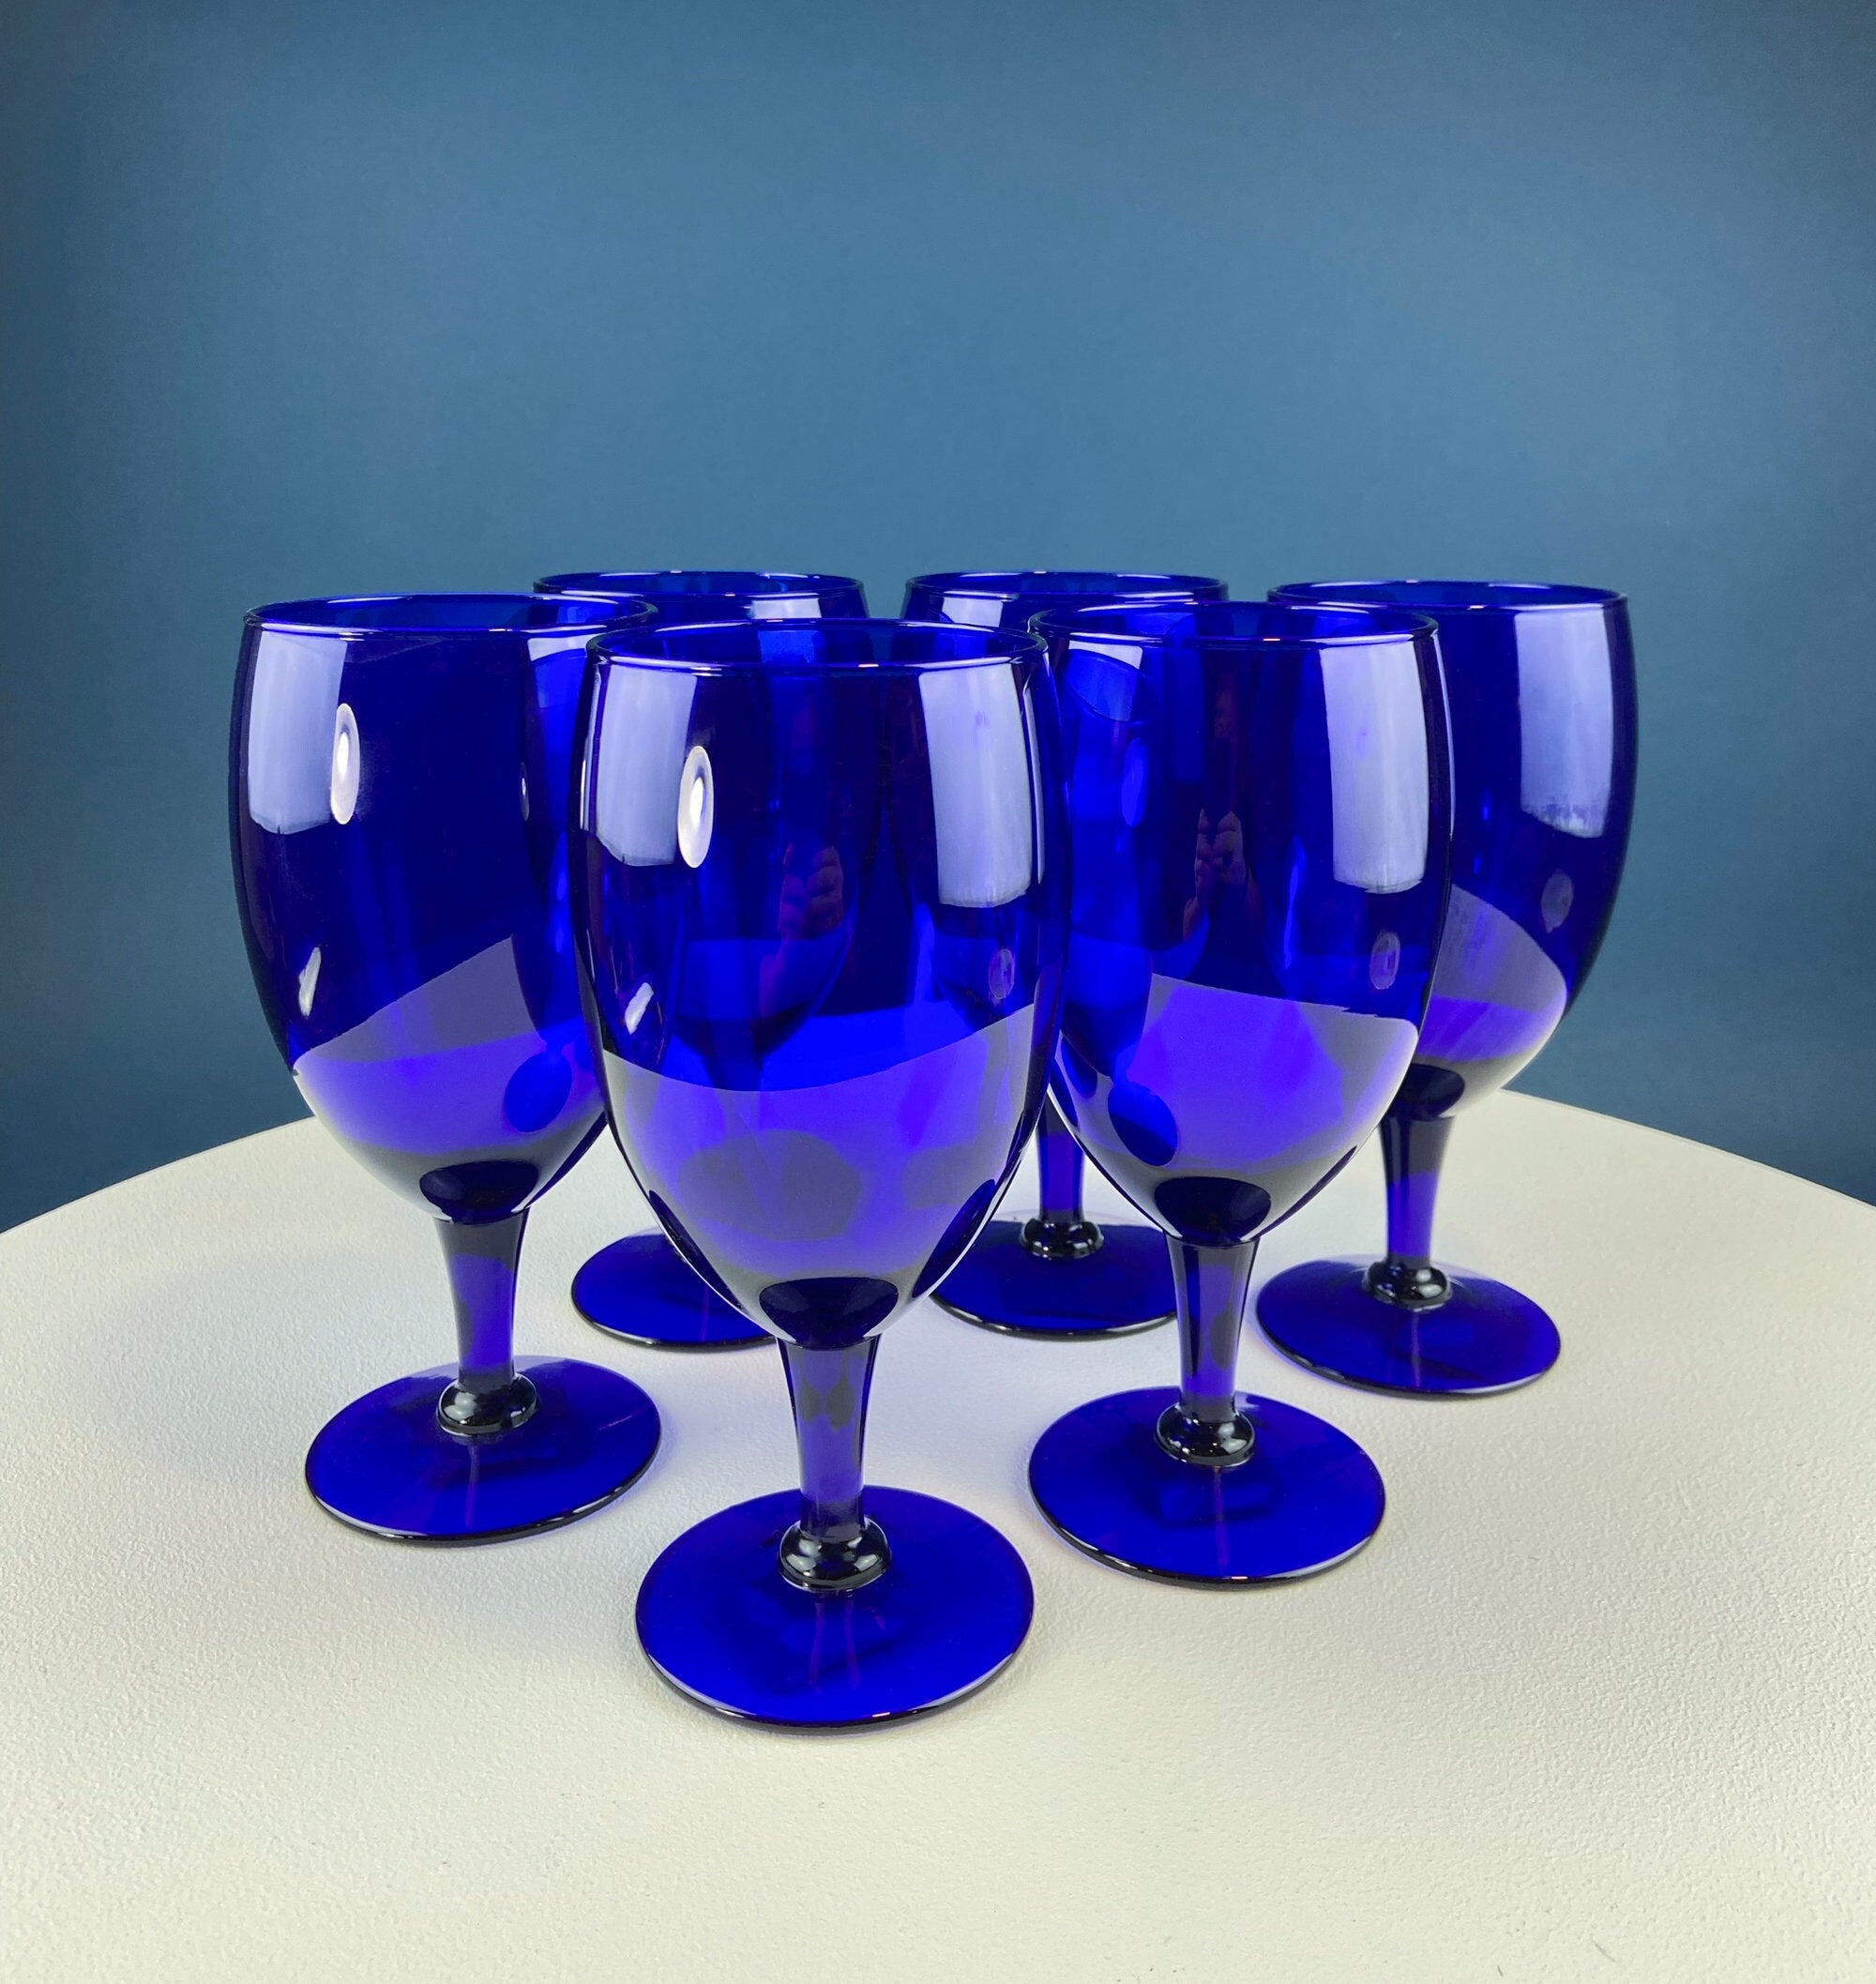 Libbey Cobalt Blue Champagne Flutes, a Set of 6